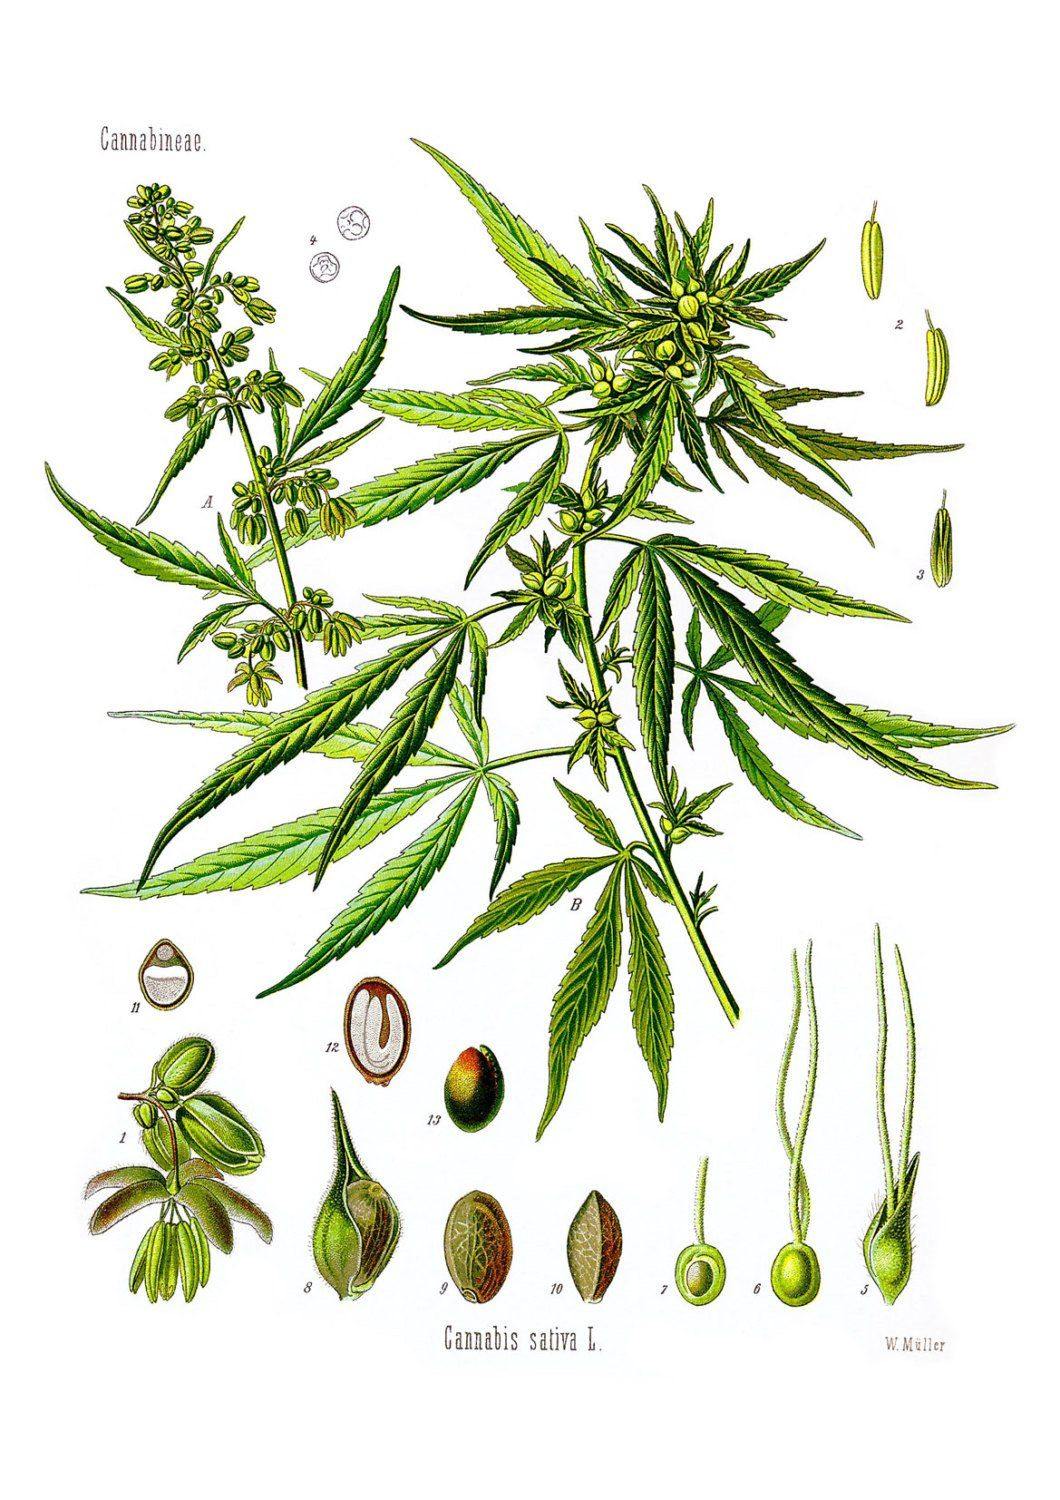 HEMP ART PRINT: Vintage Cannabis Plant Illustration - Pimlico Prints